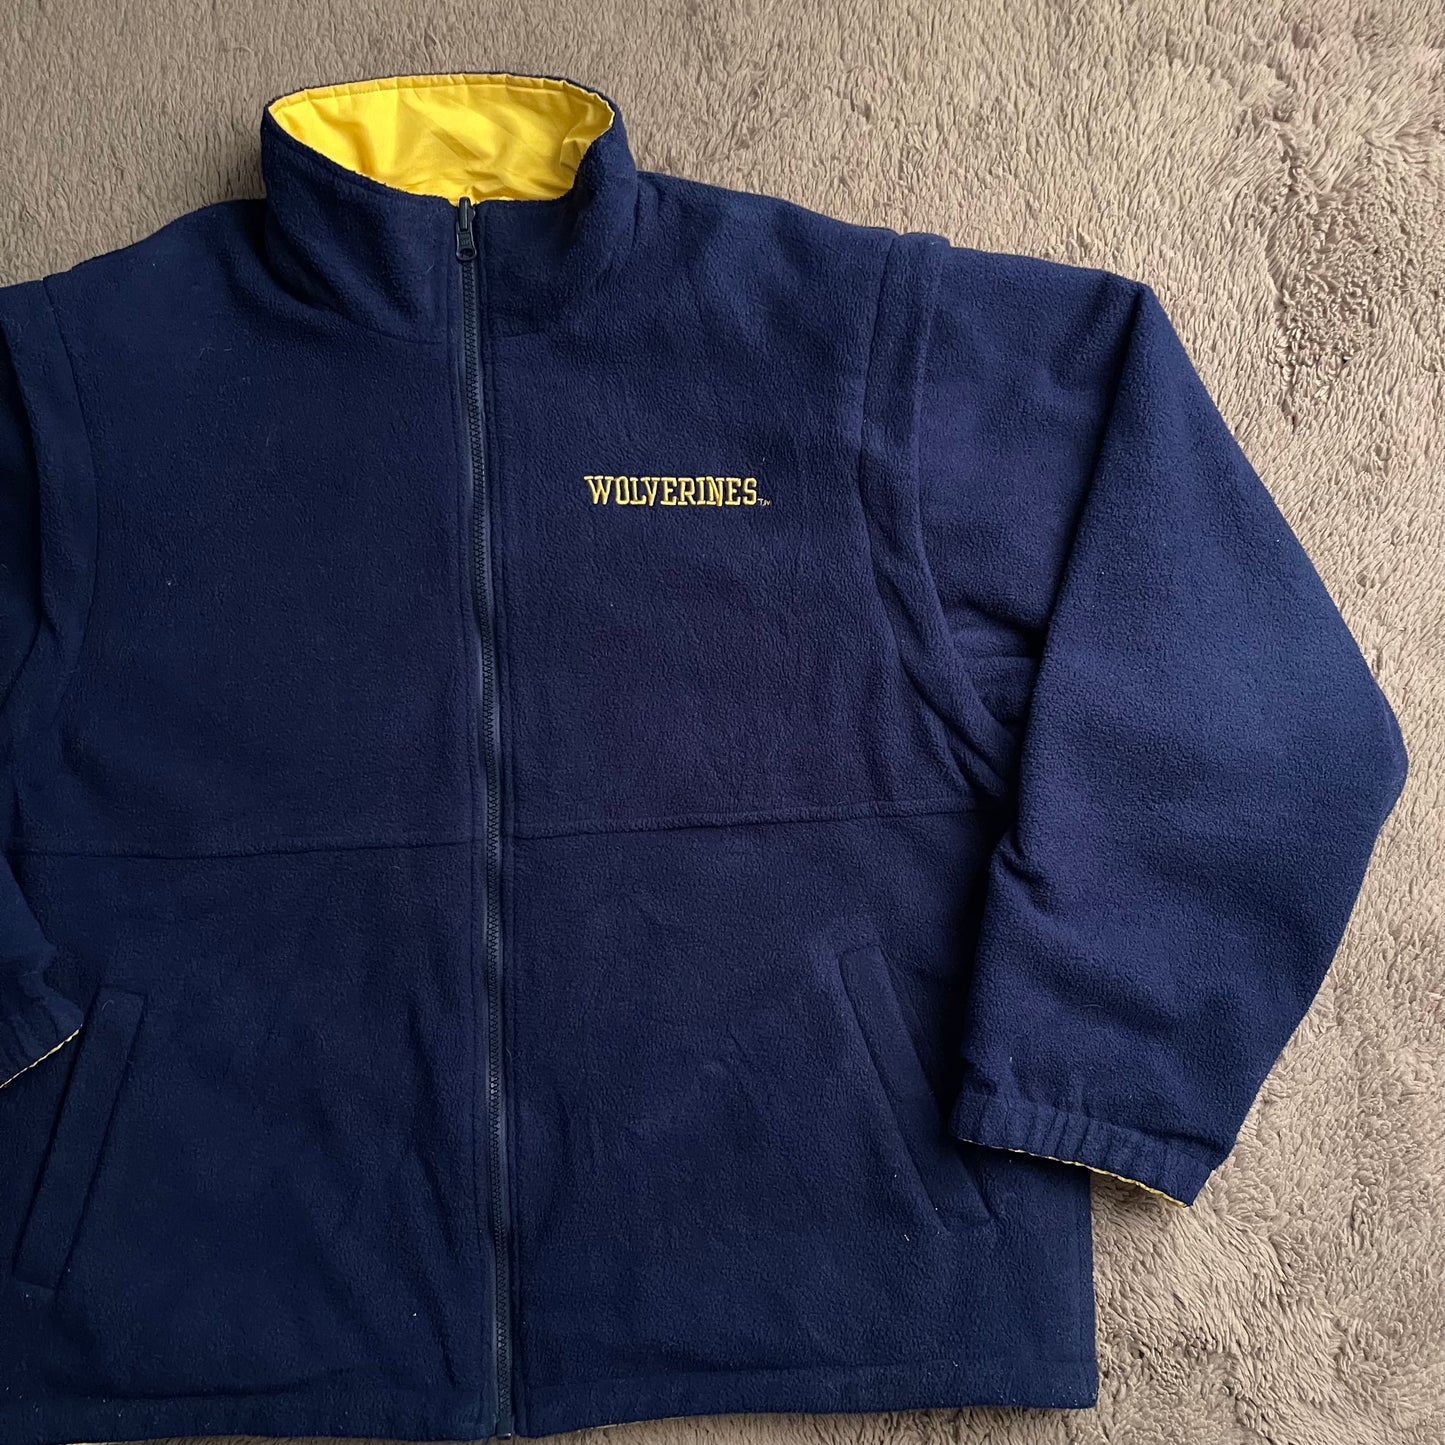 MICH Michigan Wolverines 4-Way Reversible Jacket/Vest (L)